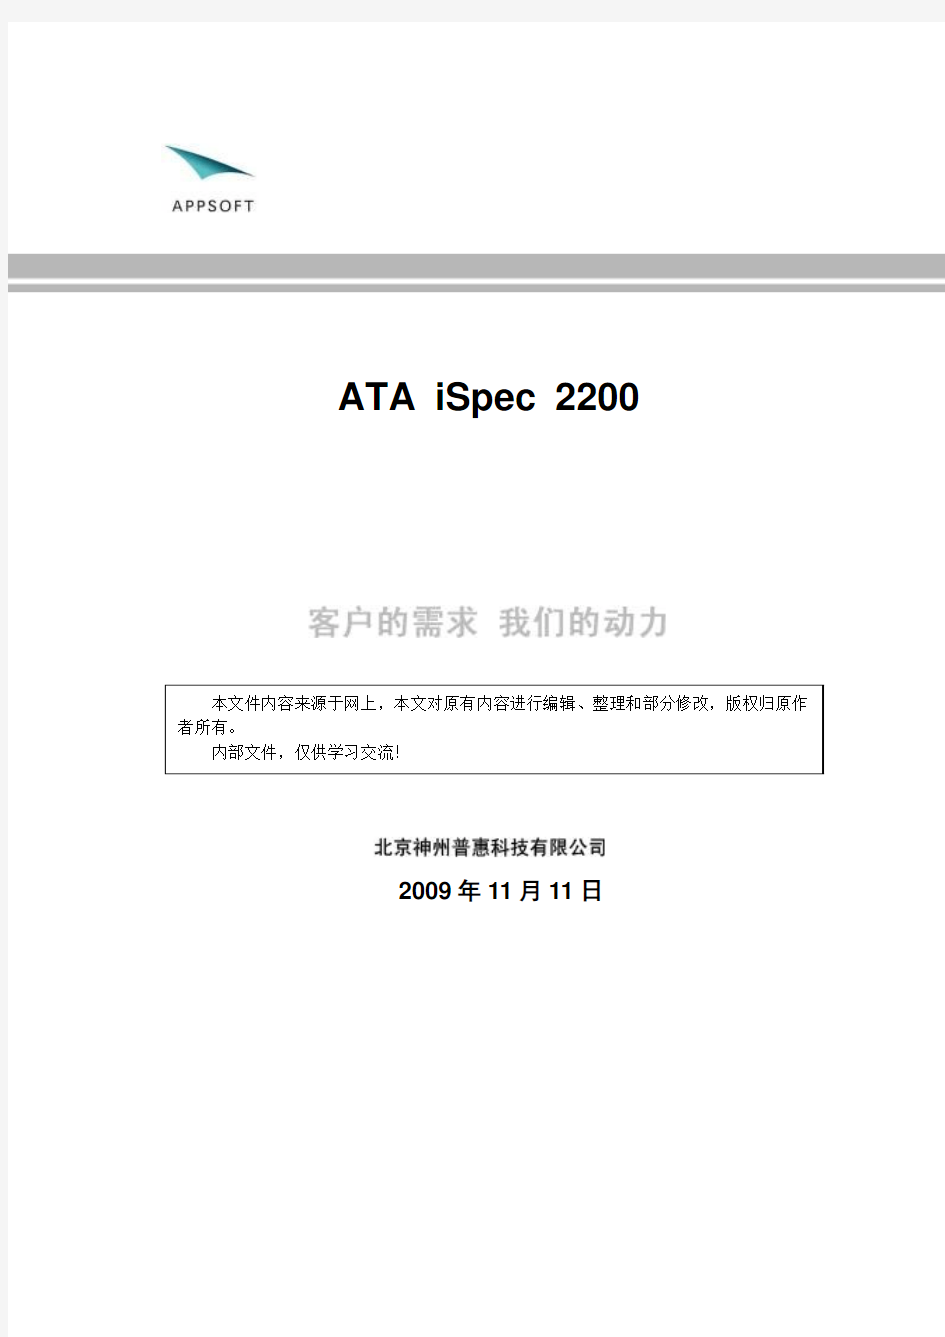 ATA iSpec 2200相关资料介绍